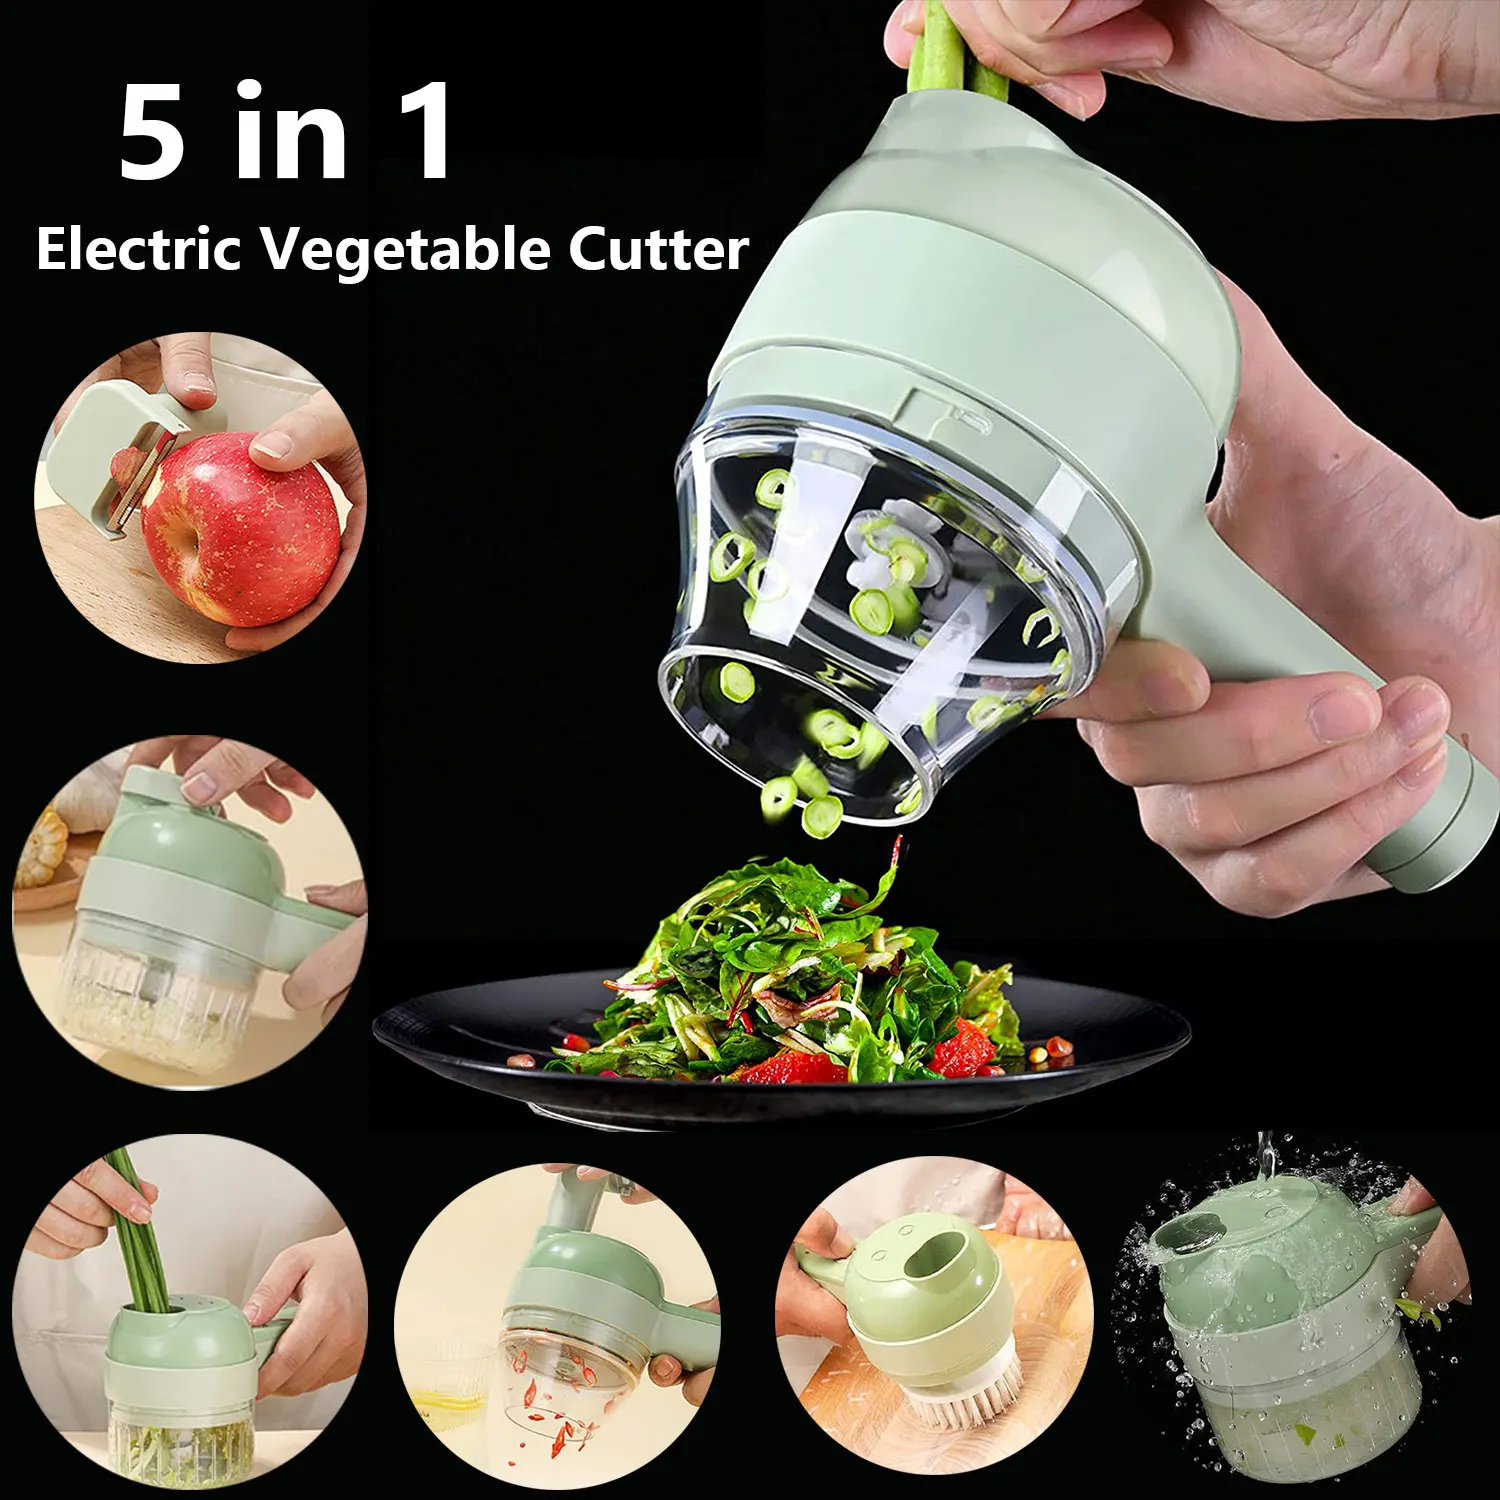 https://ae01.alicdn.com/kf/S940c8b356b704271bca3d90ad4e88208K/4-In-1-Handheld-Electric-Vegetable-Cutter-Set-Multifunctional-Food-Processor-Slicer-Kitchen-Grater-Portable-Wireless.jpg